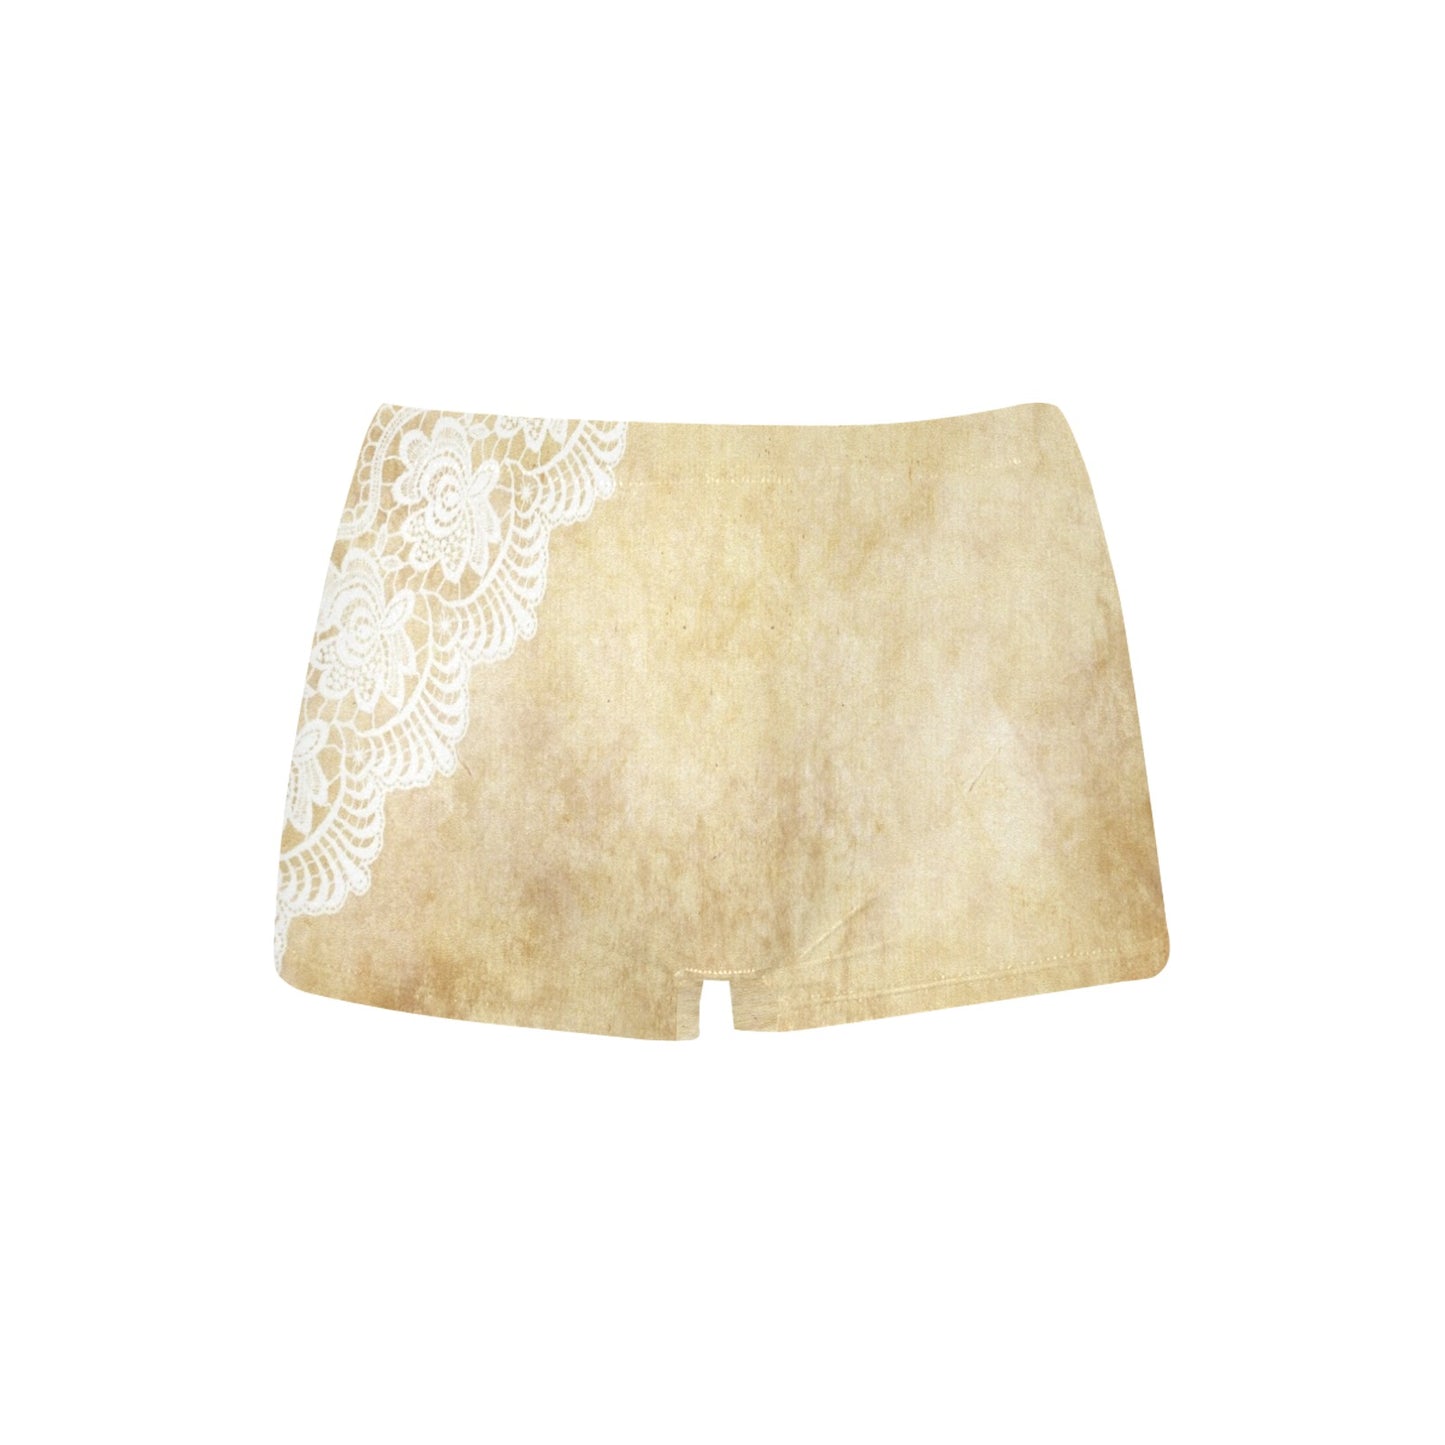 Printed Lace Boyshorts, daisy dukes, pum pum shorts, shortie shorts , design 29